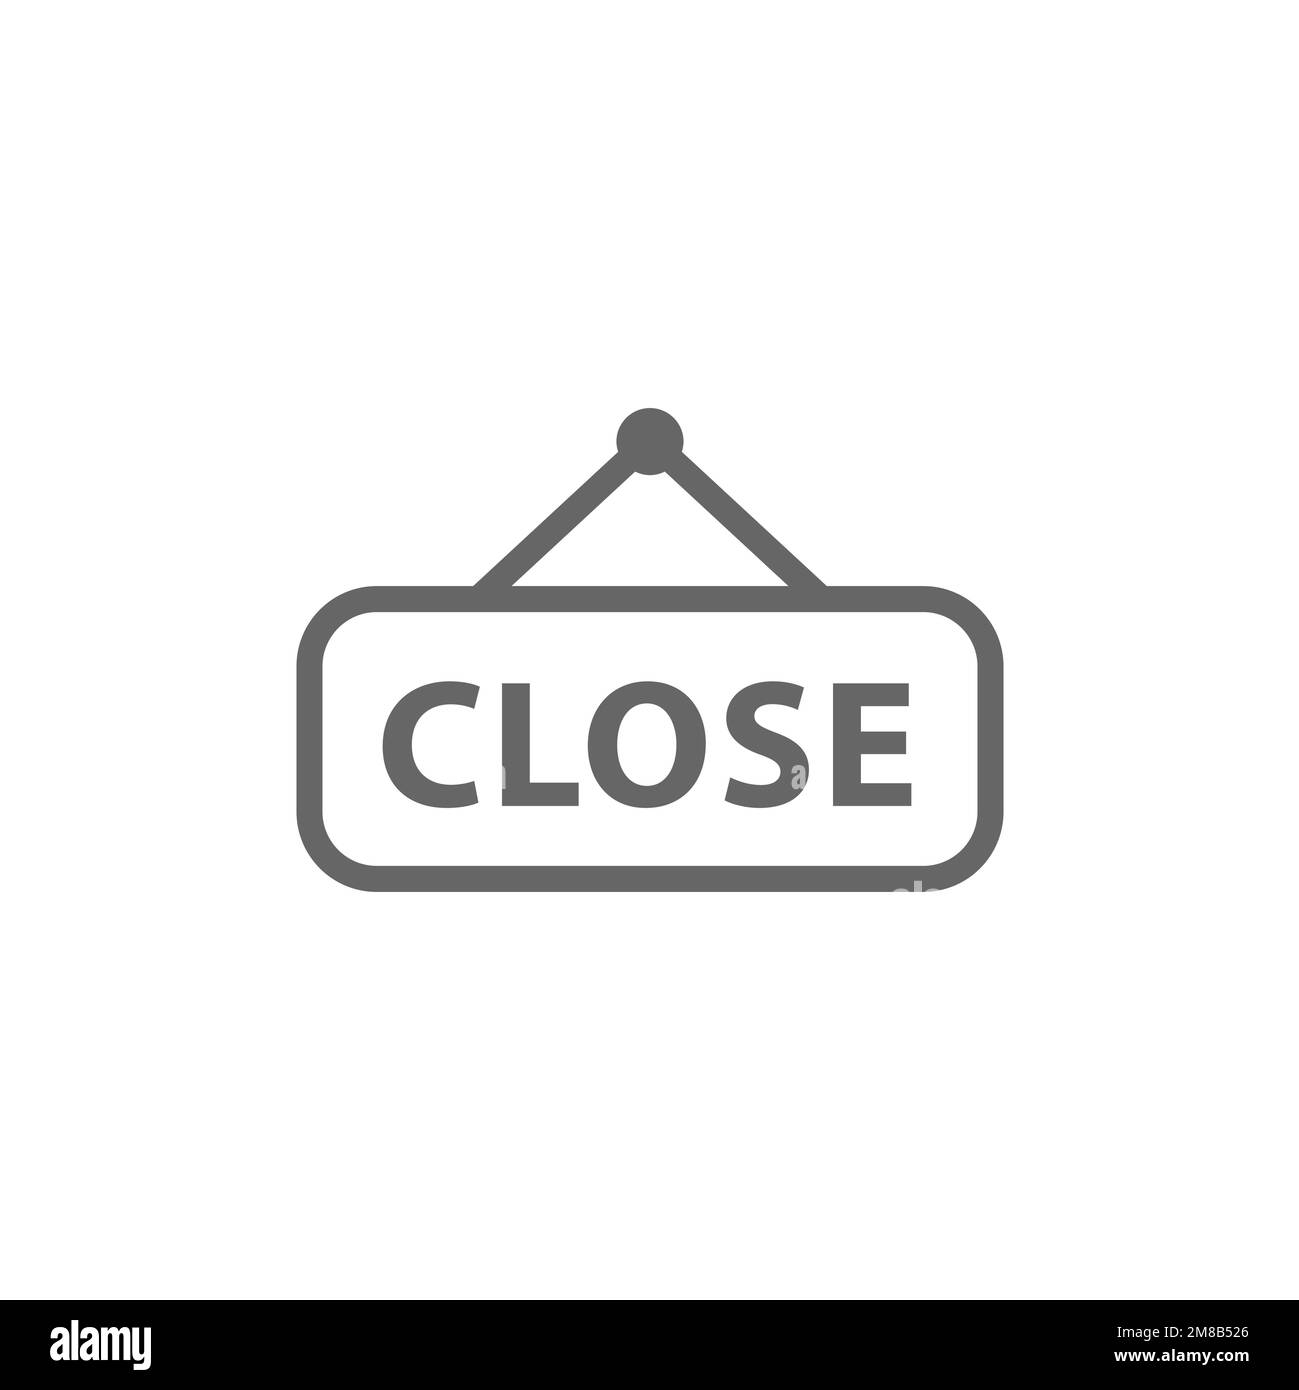 Closing icon, store closing graphic resource mockup, vector